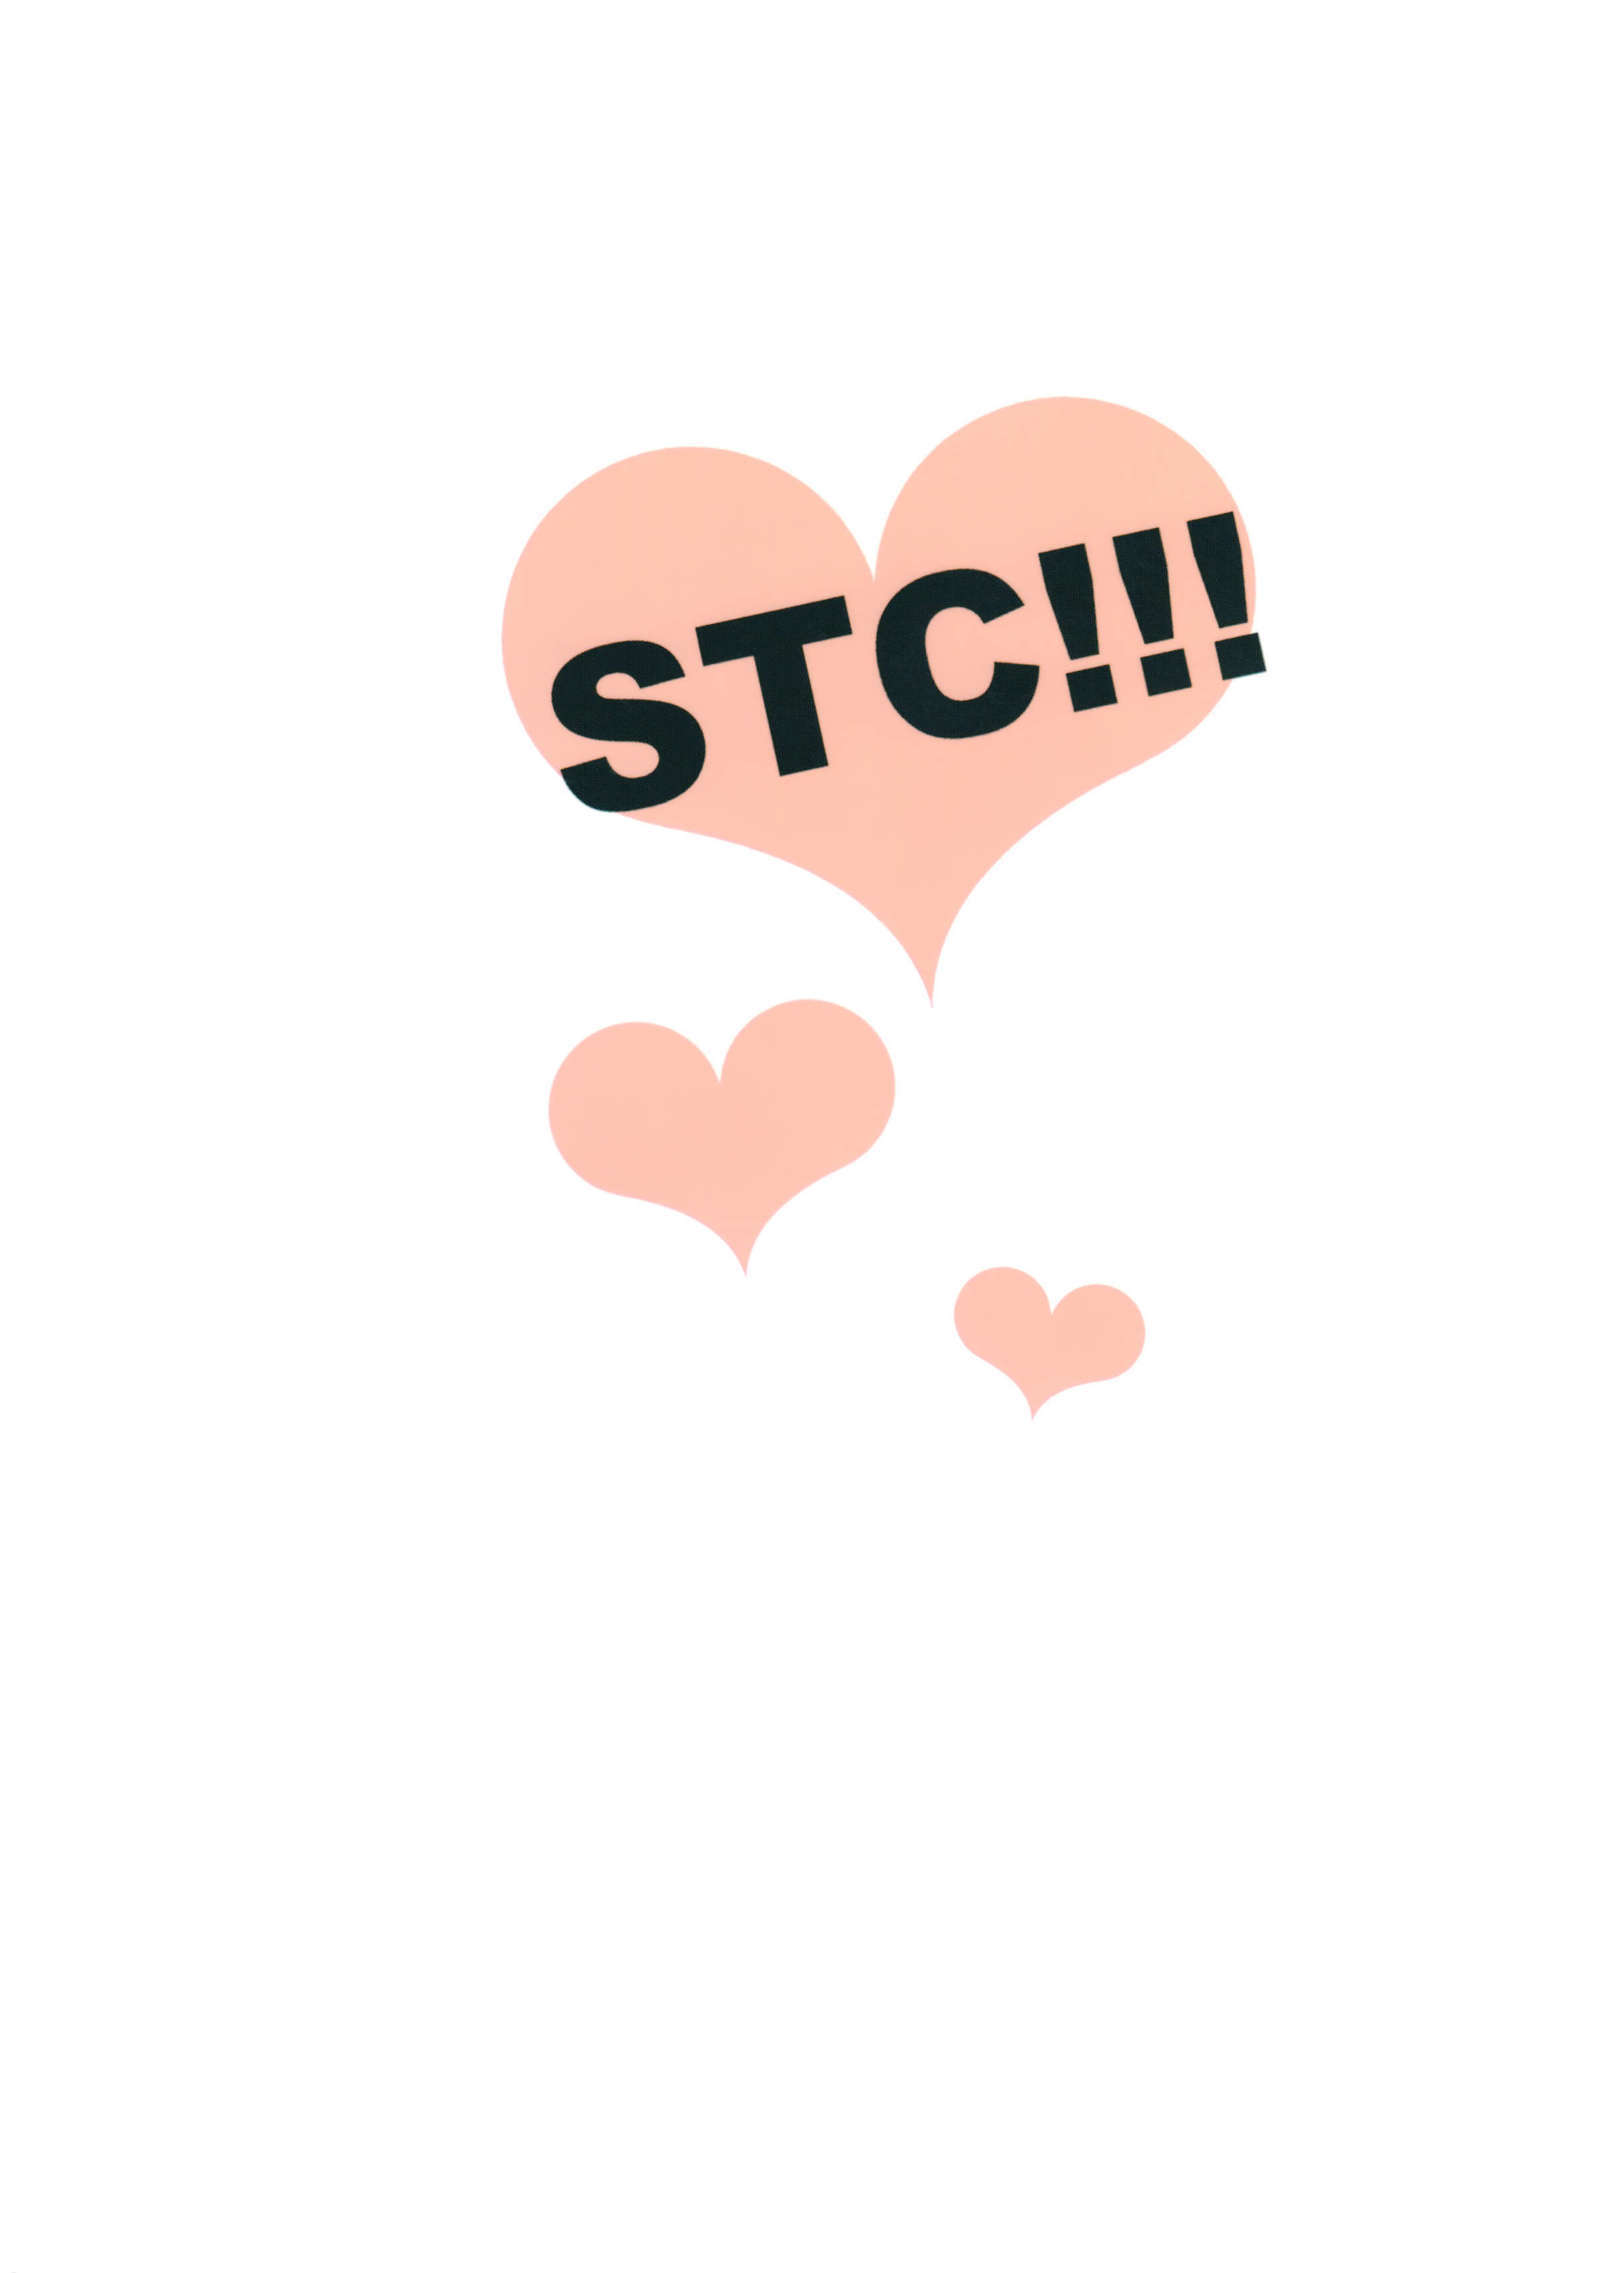 STC !!!